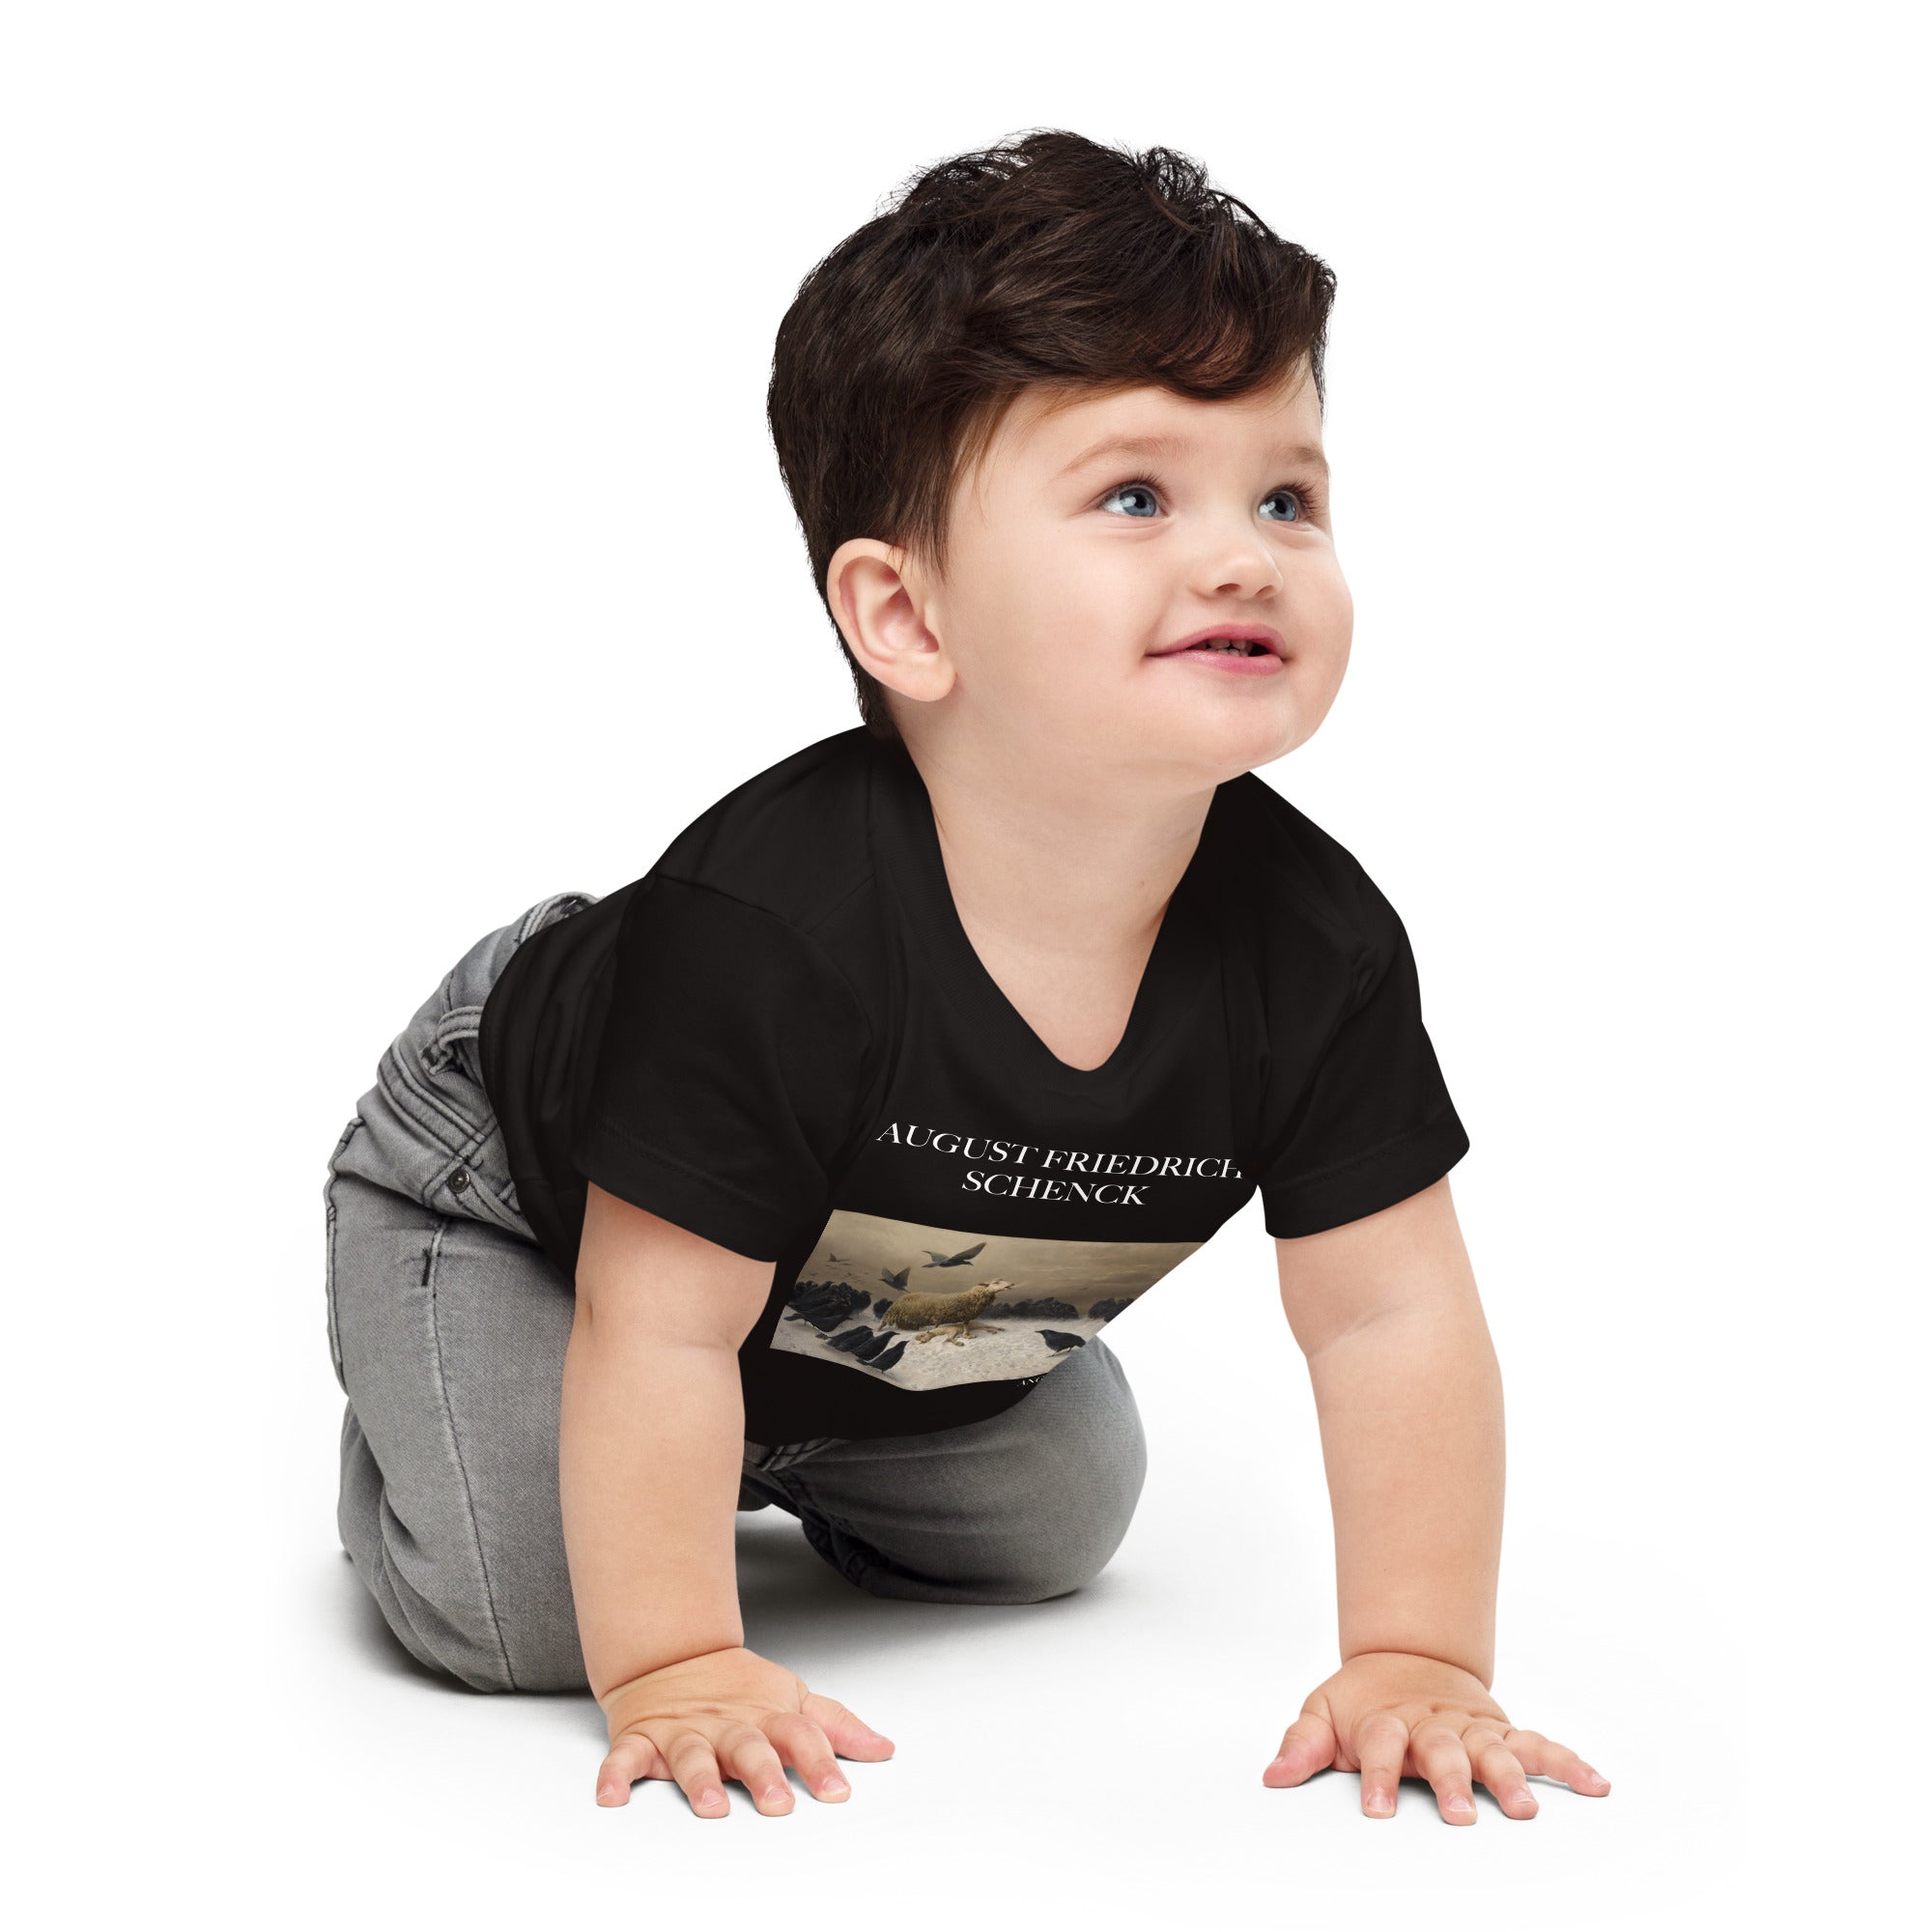 August Friedrich Schenck 'Angst' Berühmtes Gemälde Baby Staple T-Shirt | Premium Baby Art T-Shirt